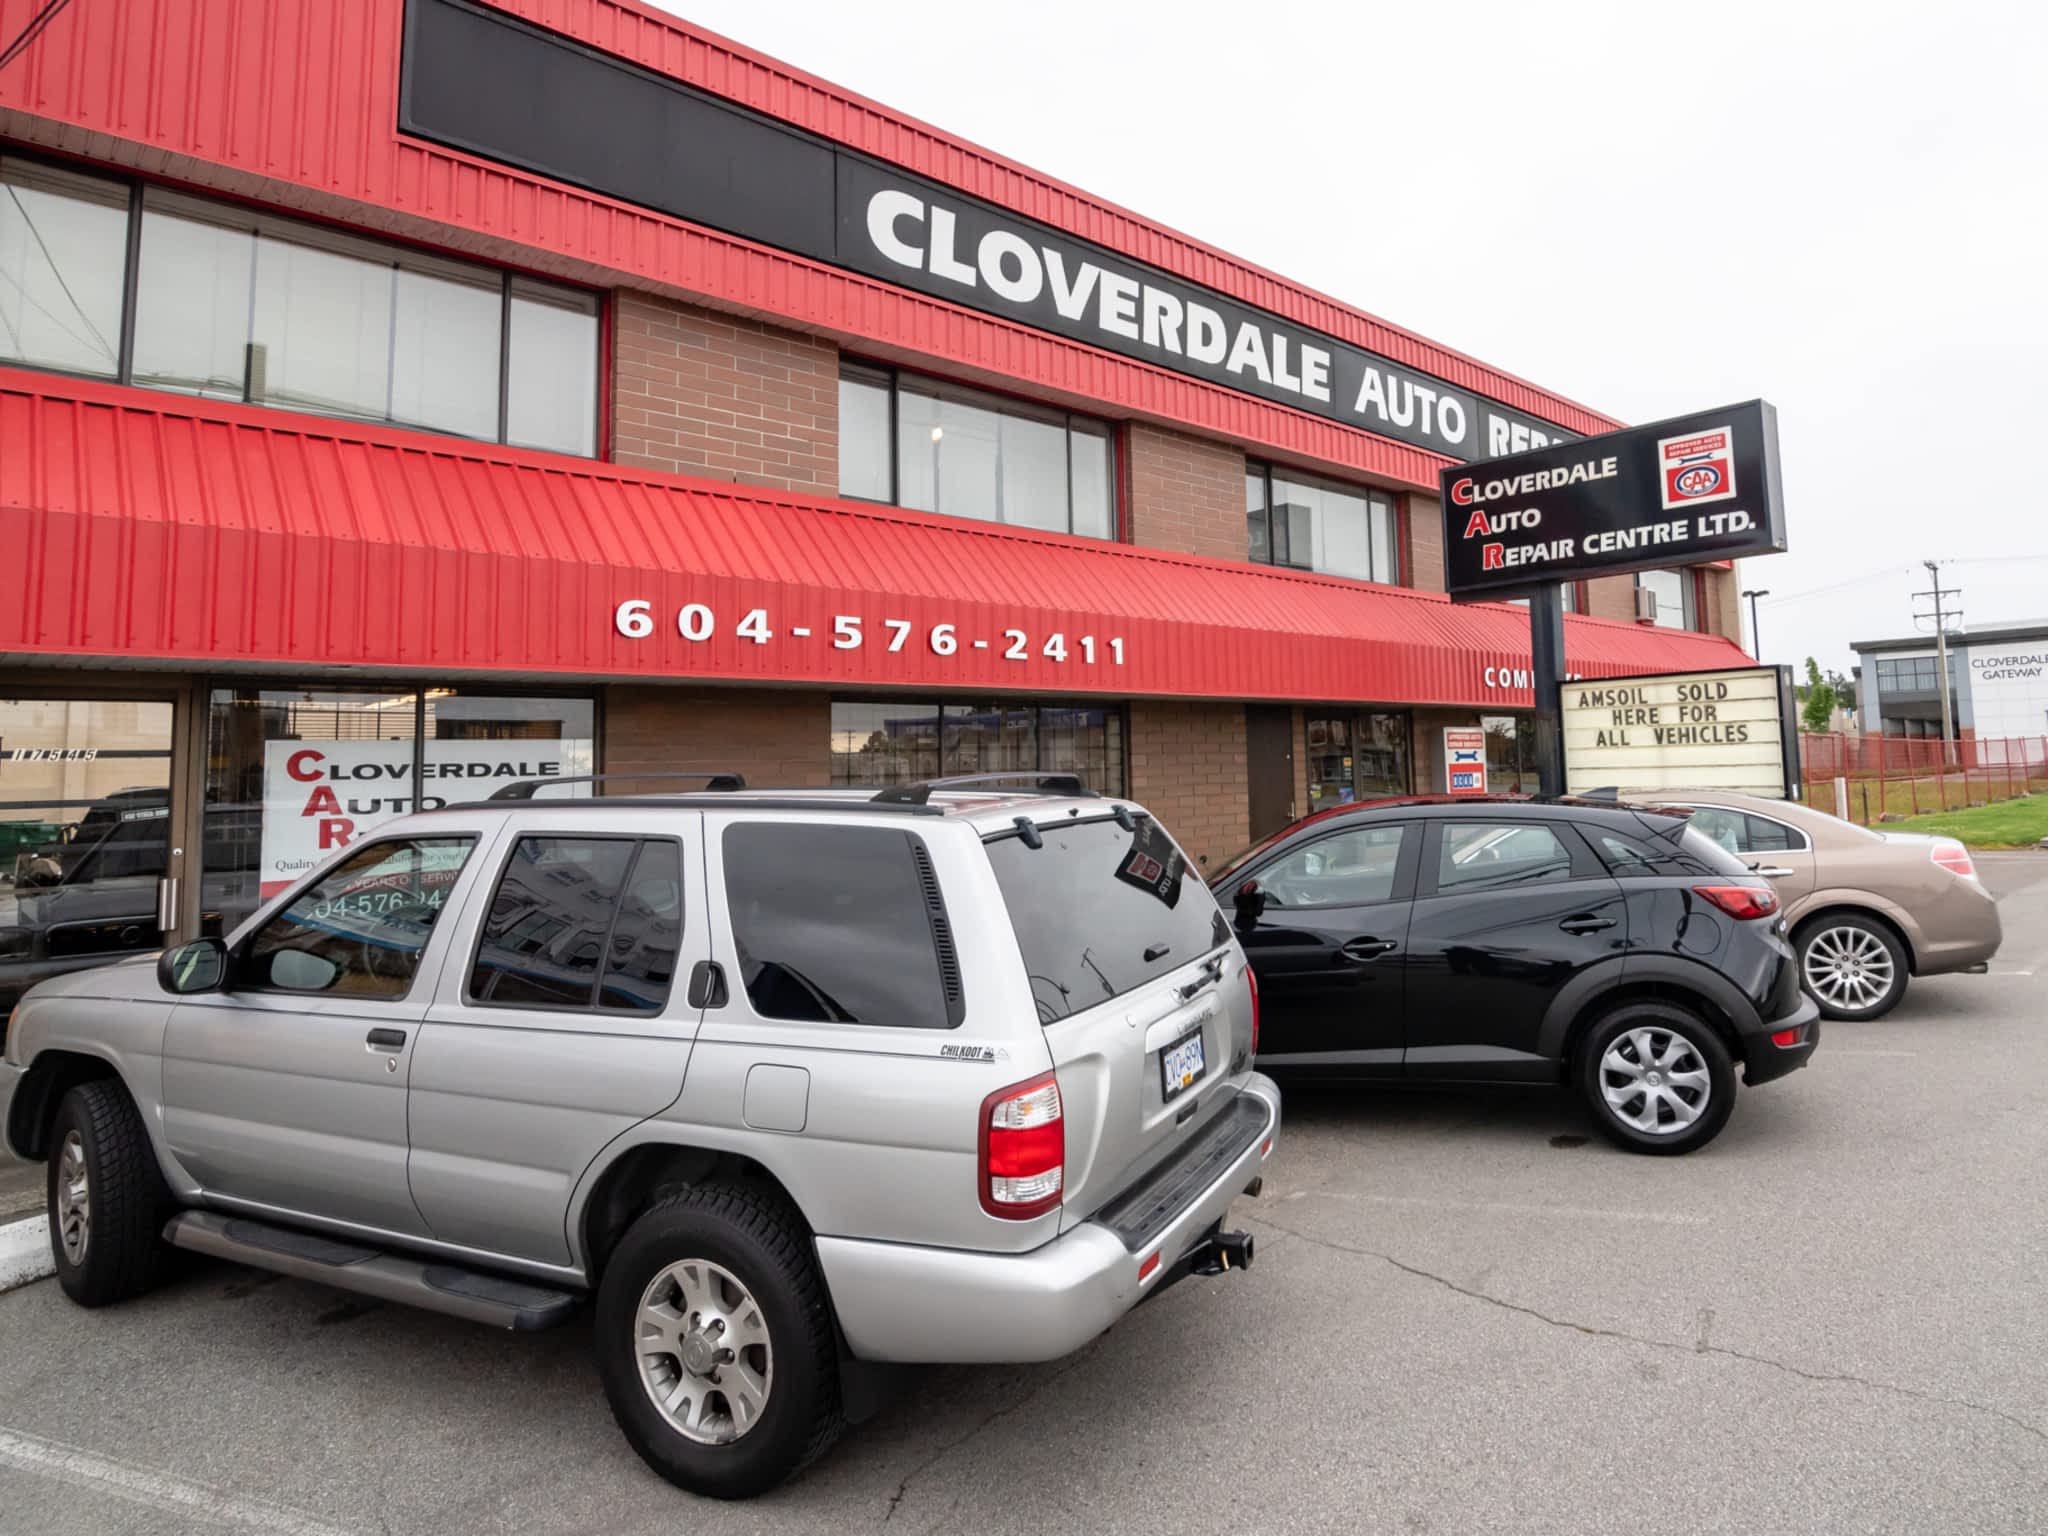 photo Cloverdale Auto Repair Center Ltd